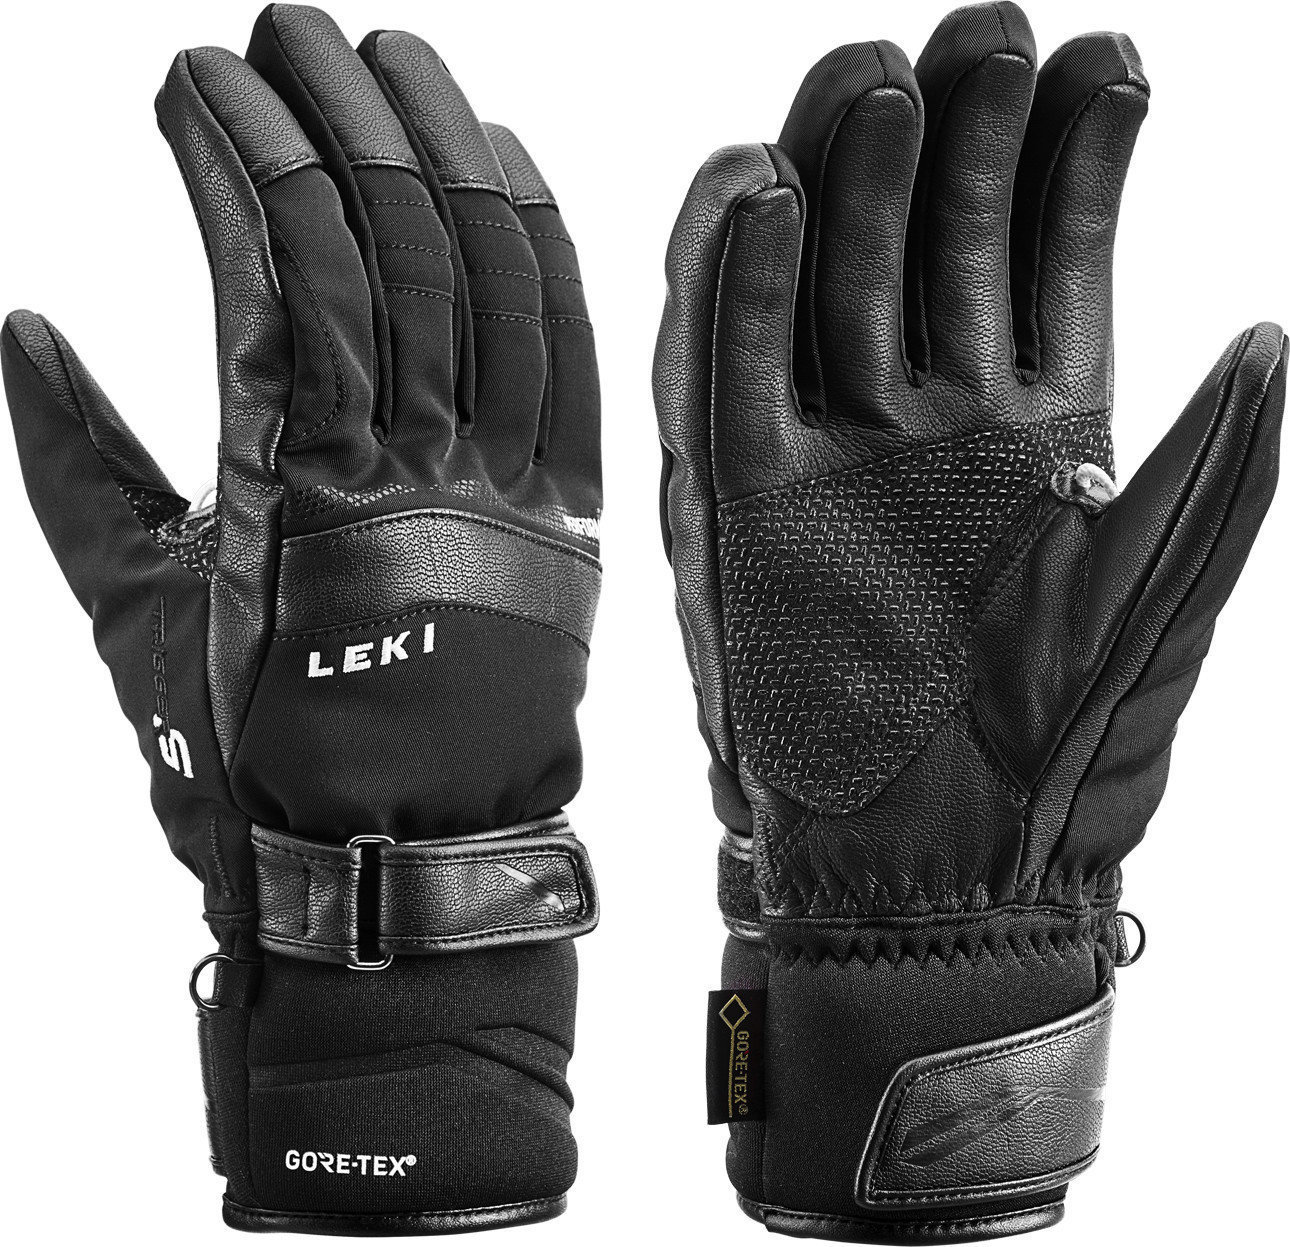 SkI Handschuhe Leki Performance S GTX Black 8,5 SkI Handschuhe